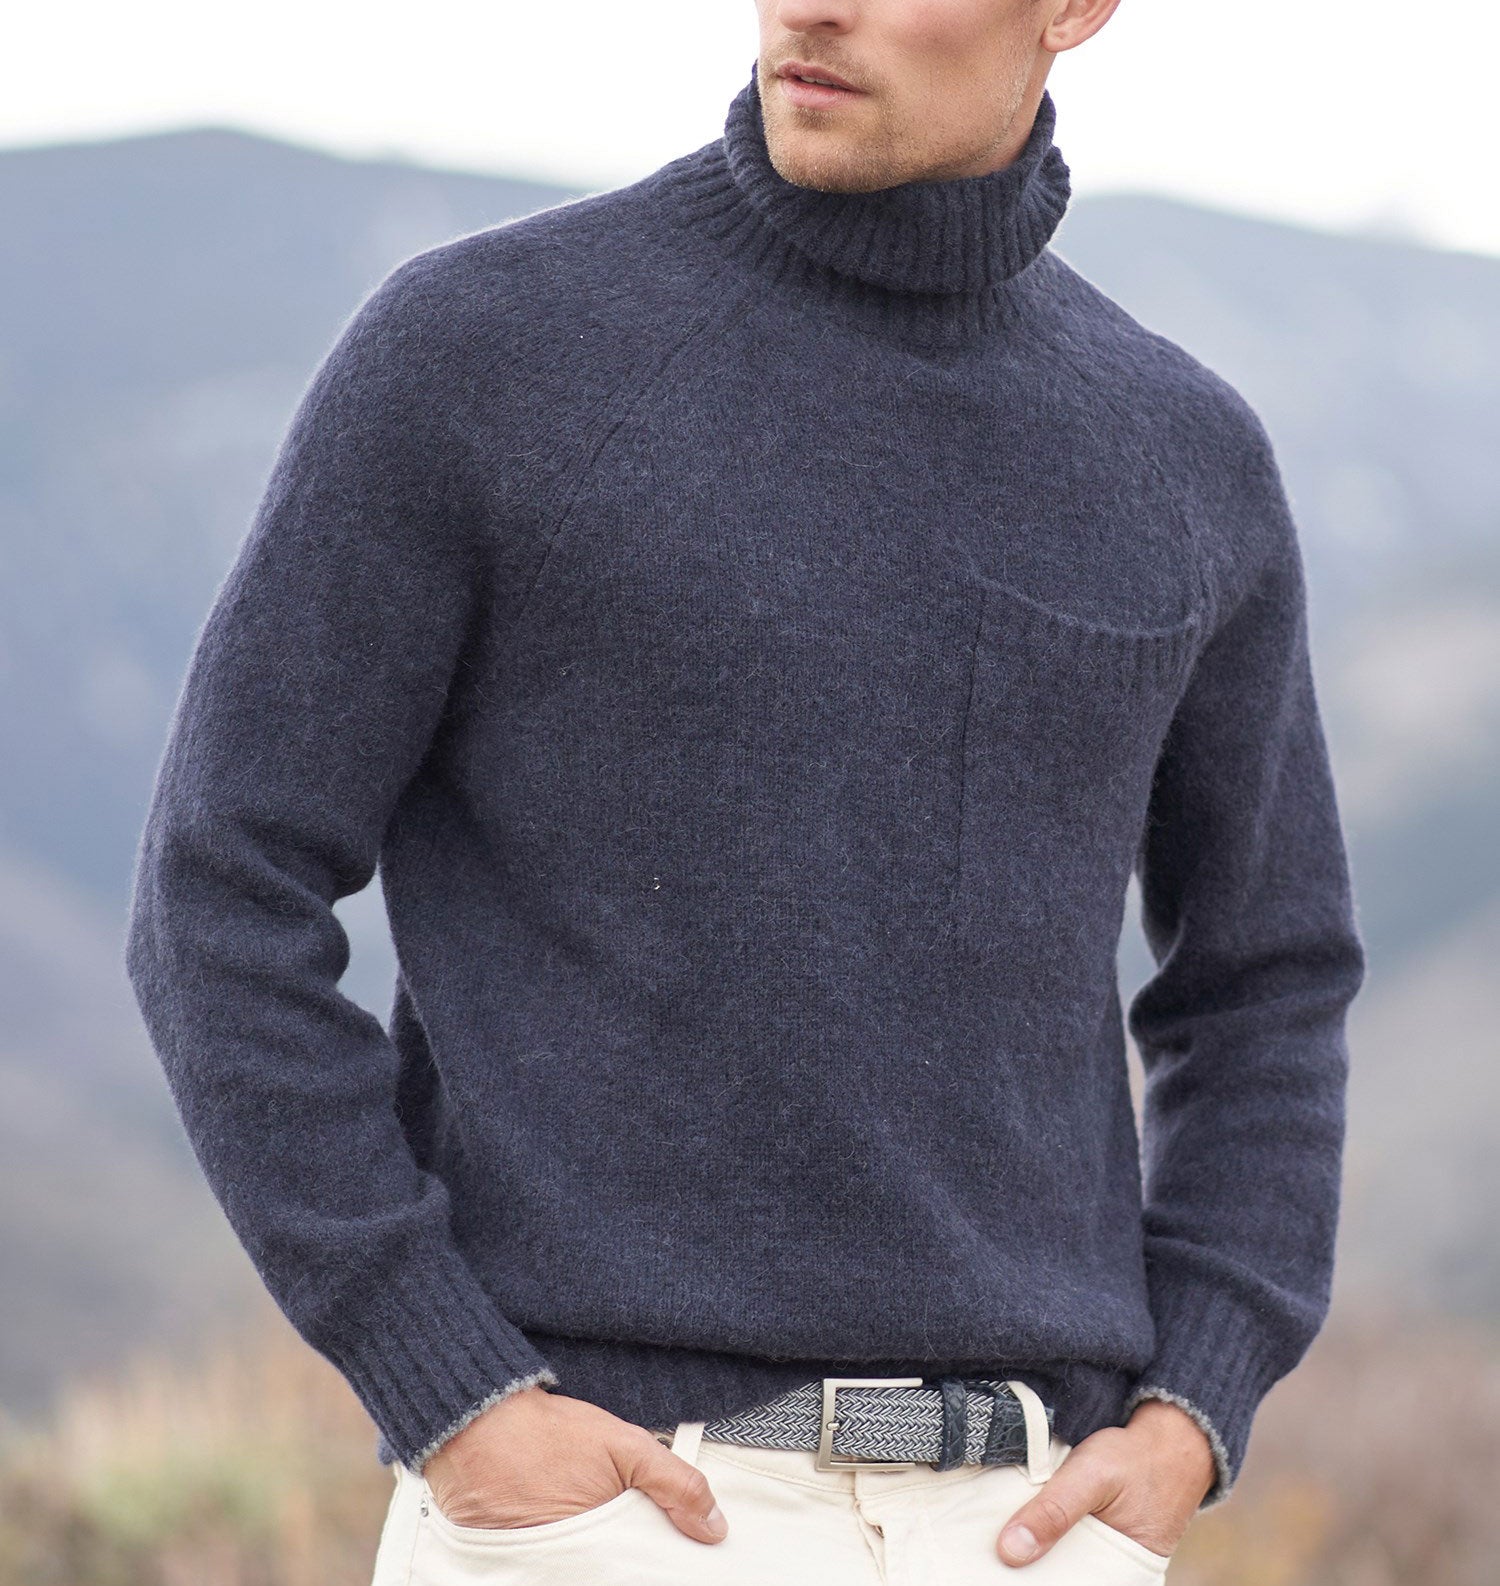 Men's wool turtleneck sweater